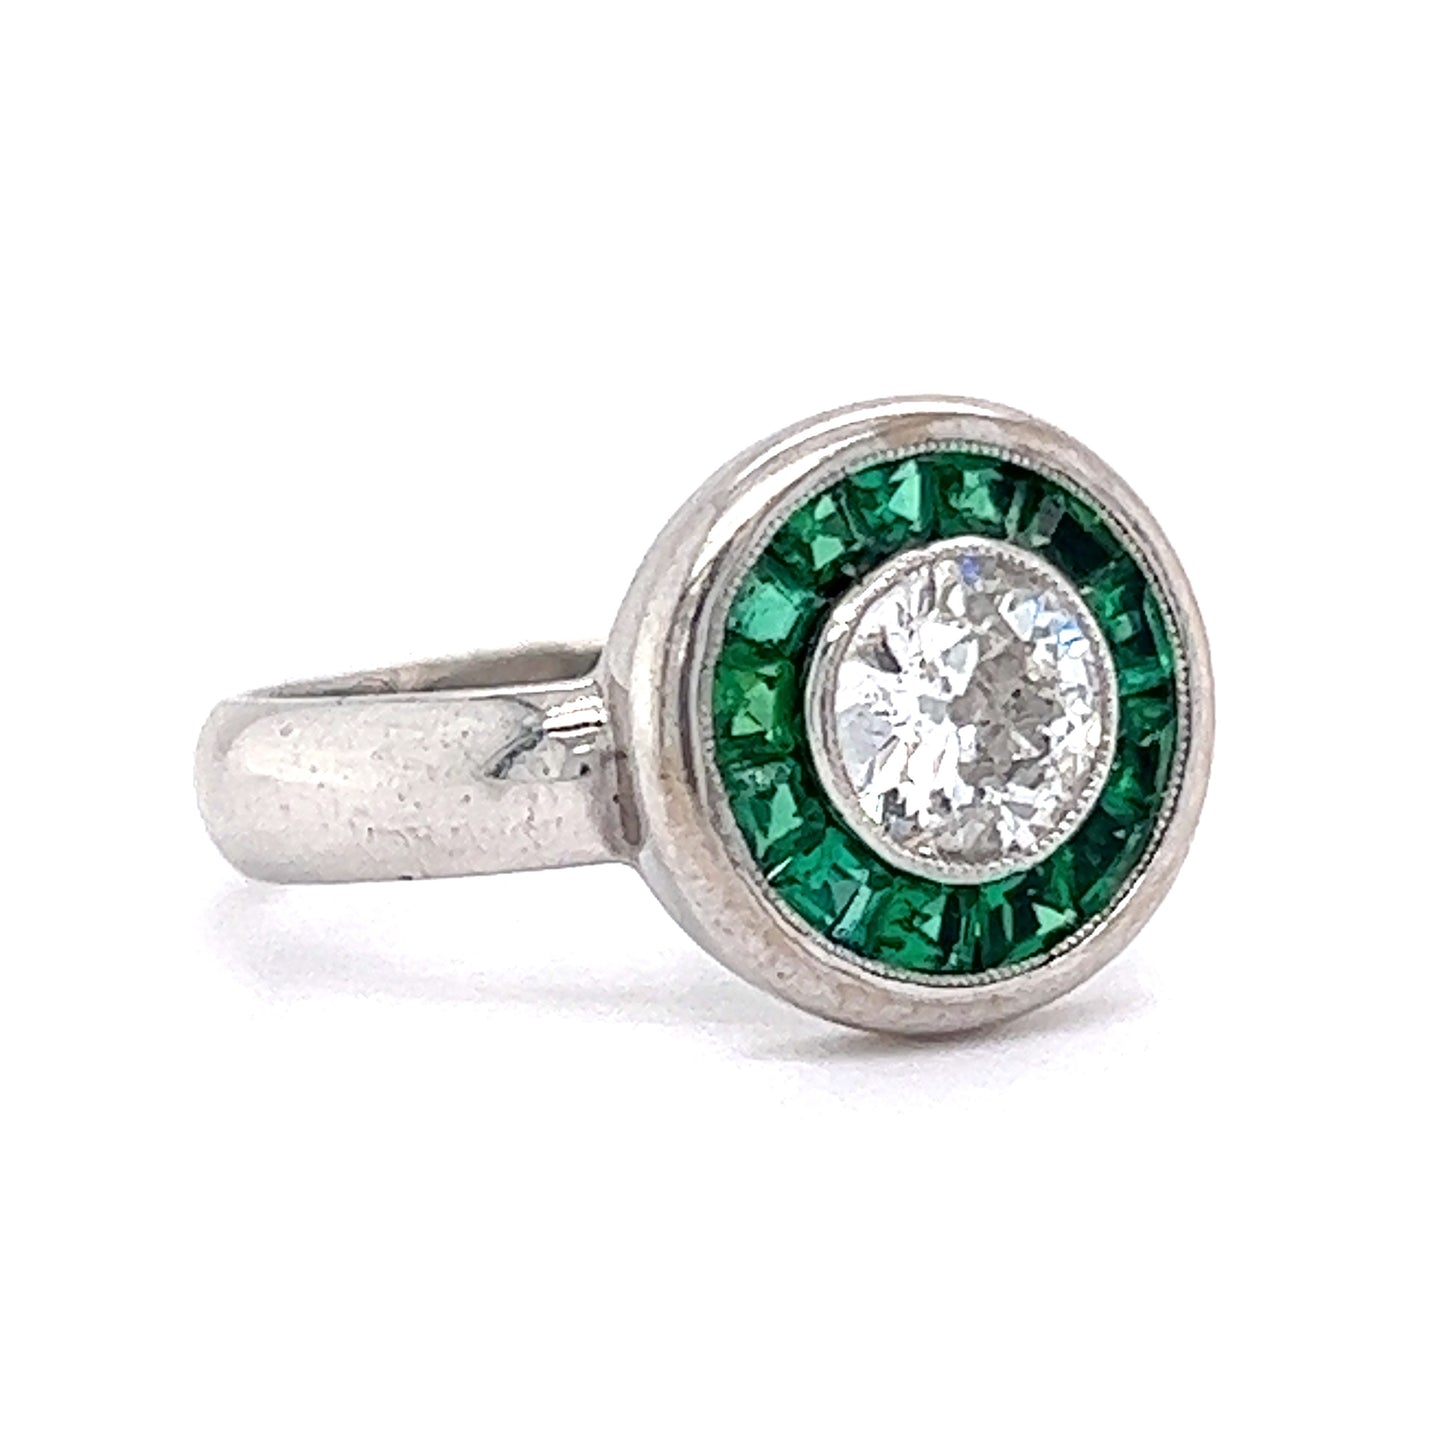 Antique Style Old European Cut Diamond w/ Emerald Halo Cocktail Ring 18k White Gold